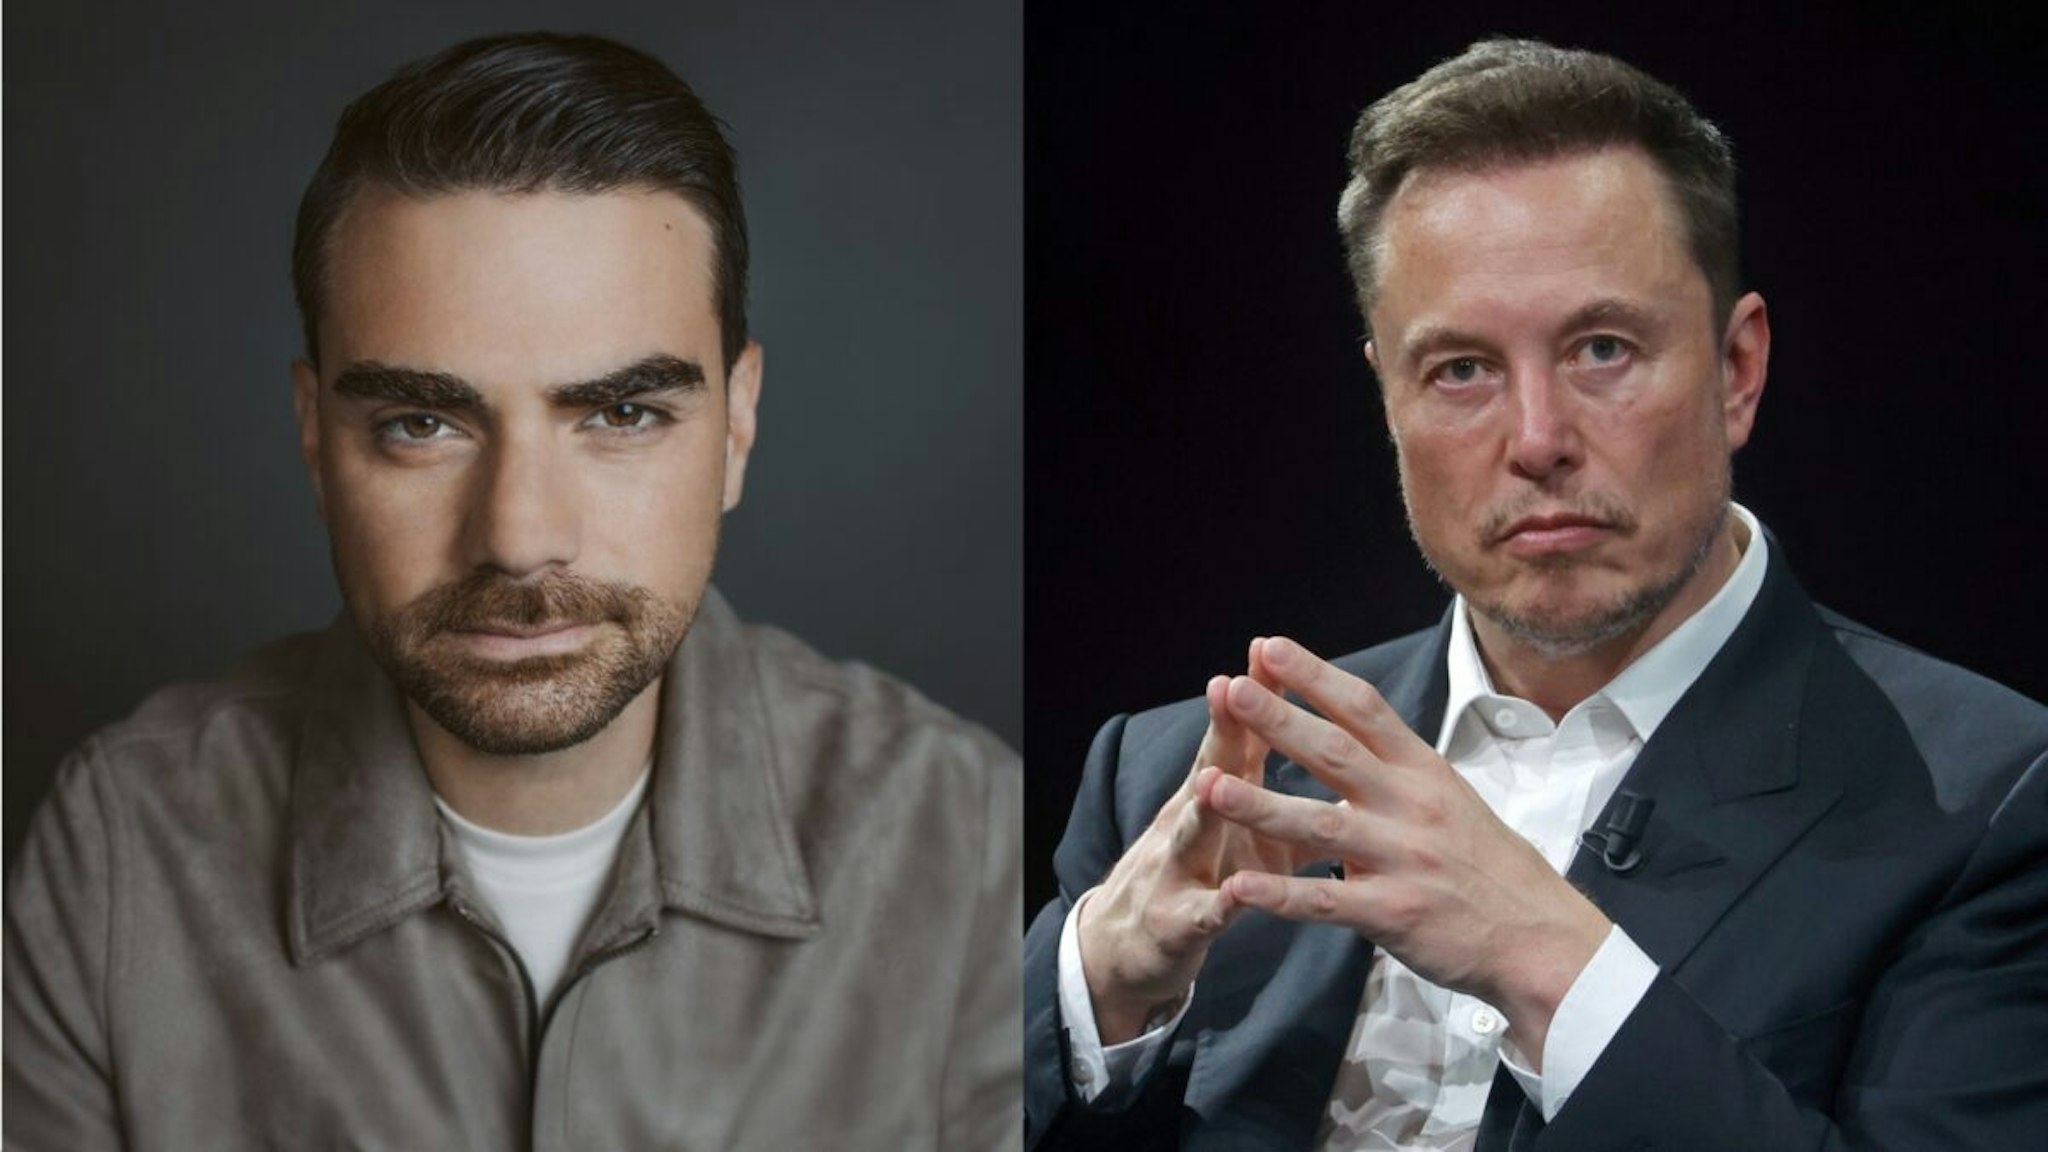 Ben Shapiro/Elon Musk